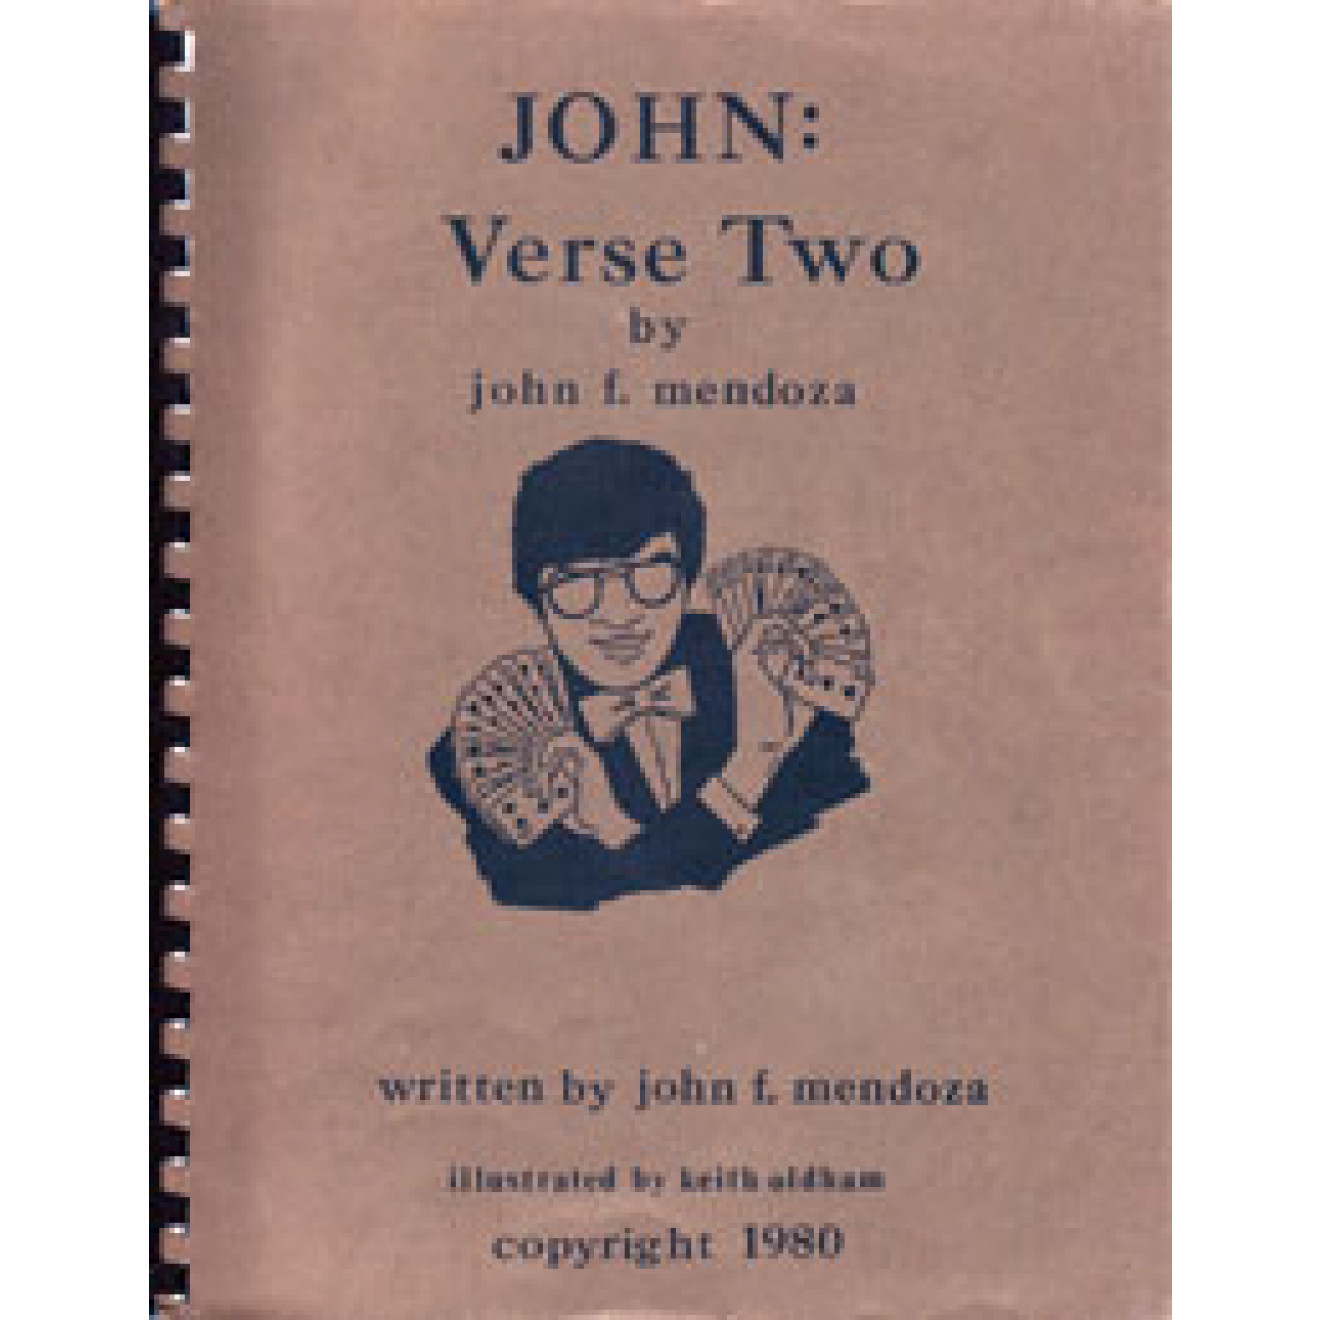 John: Verse Two